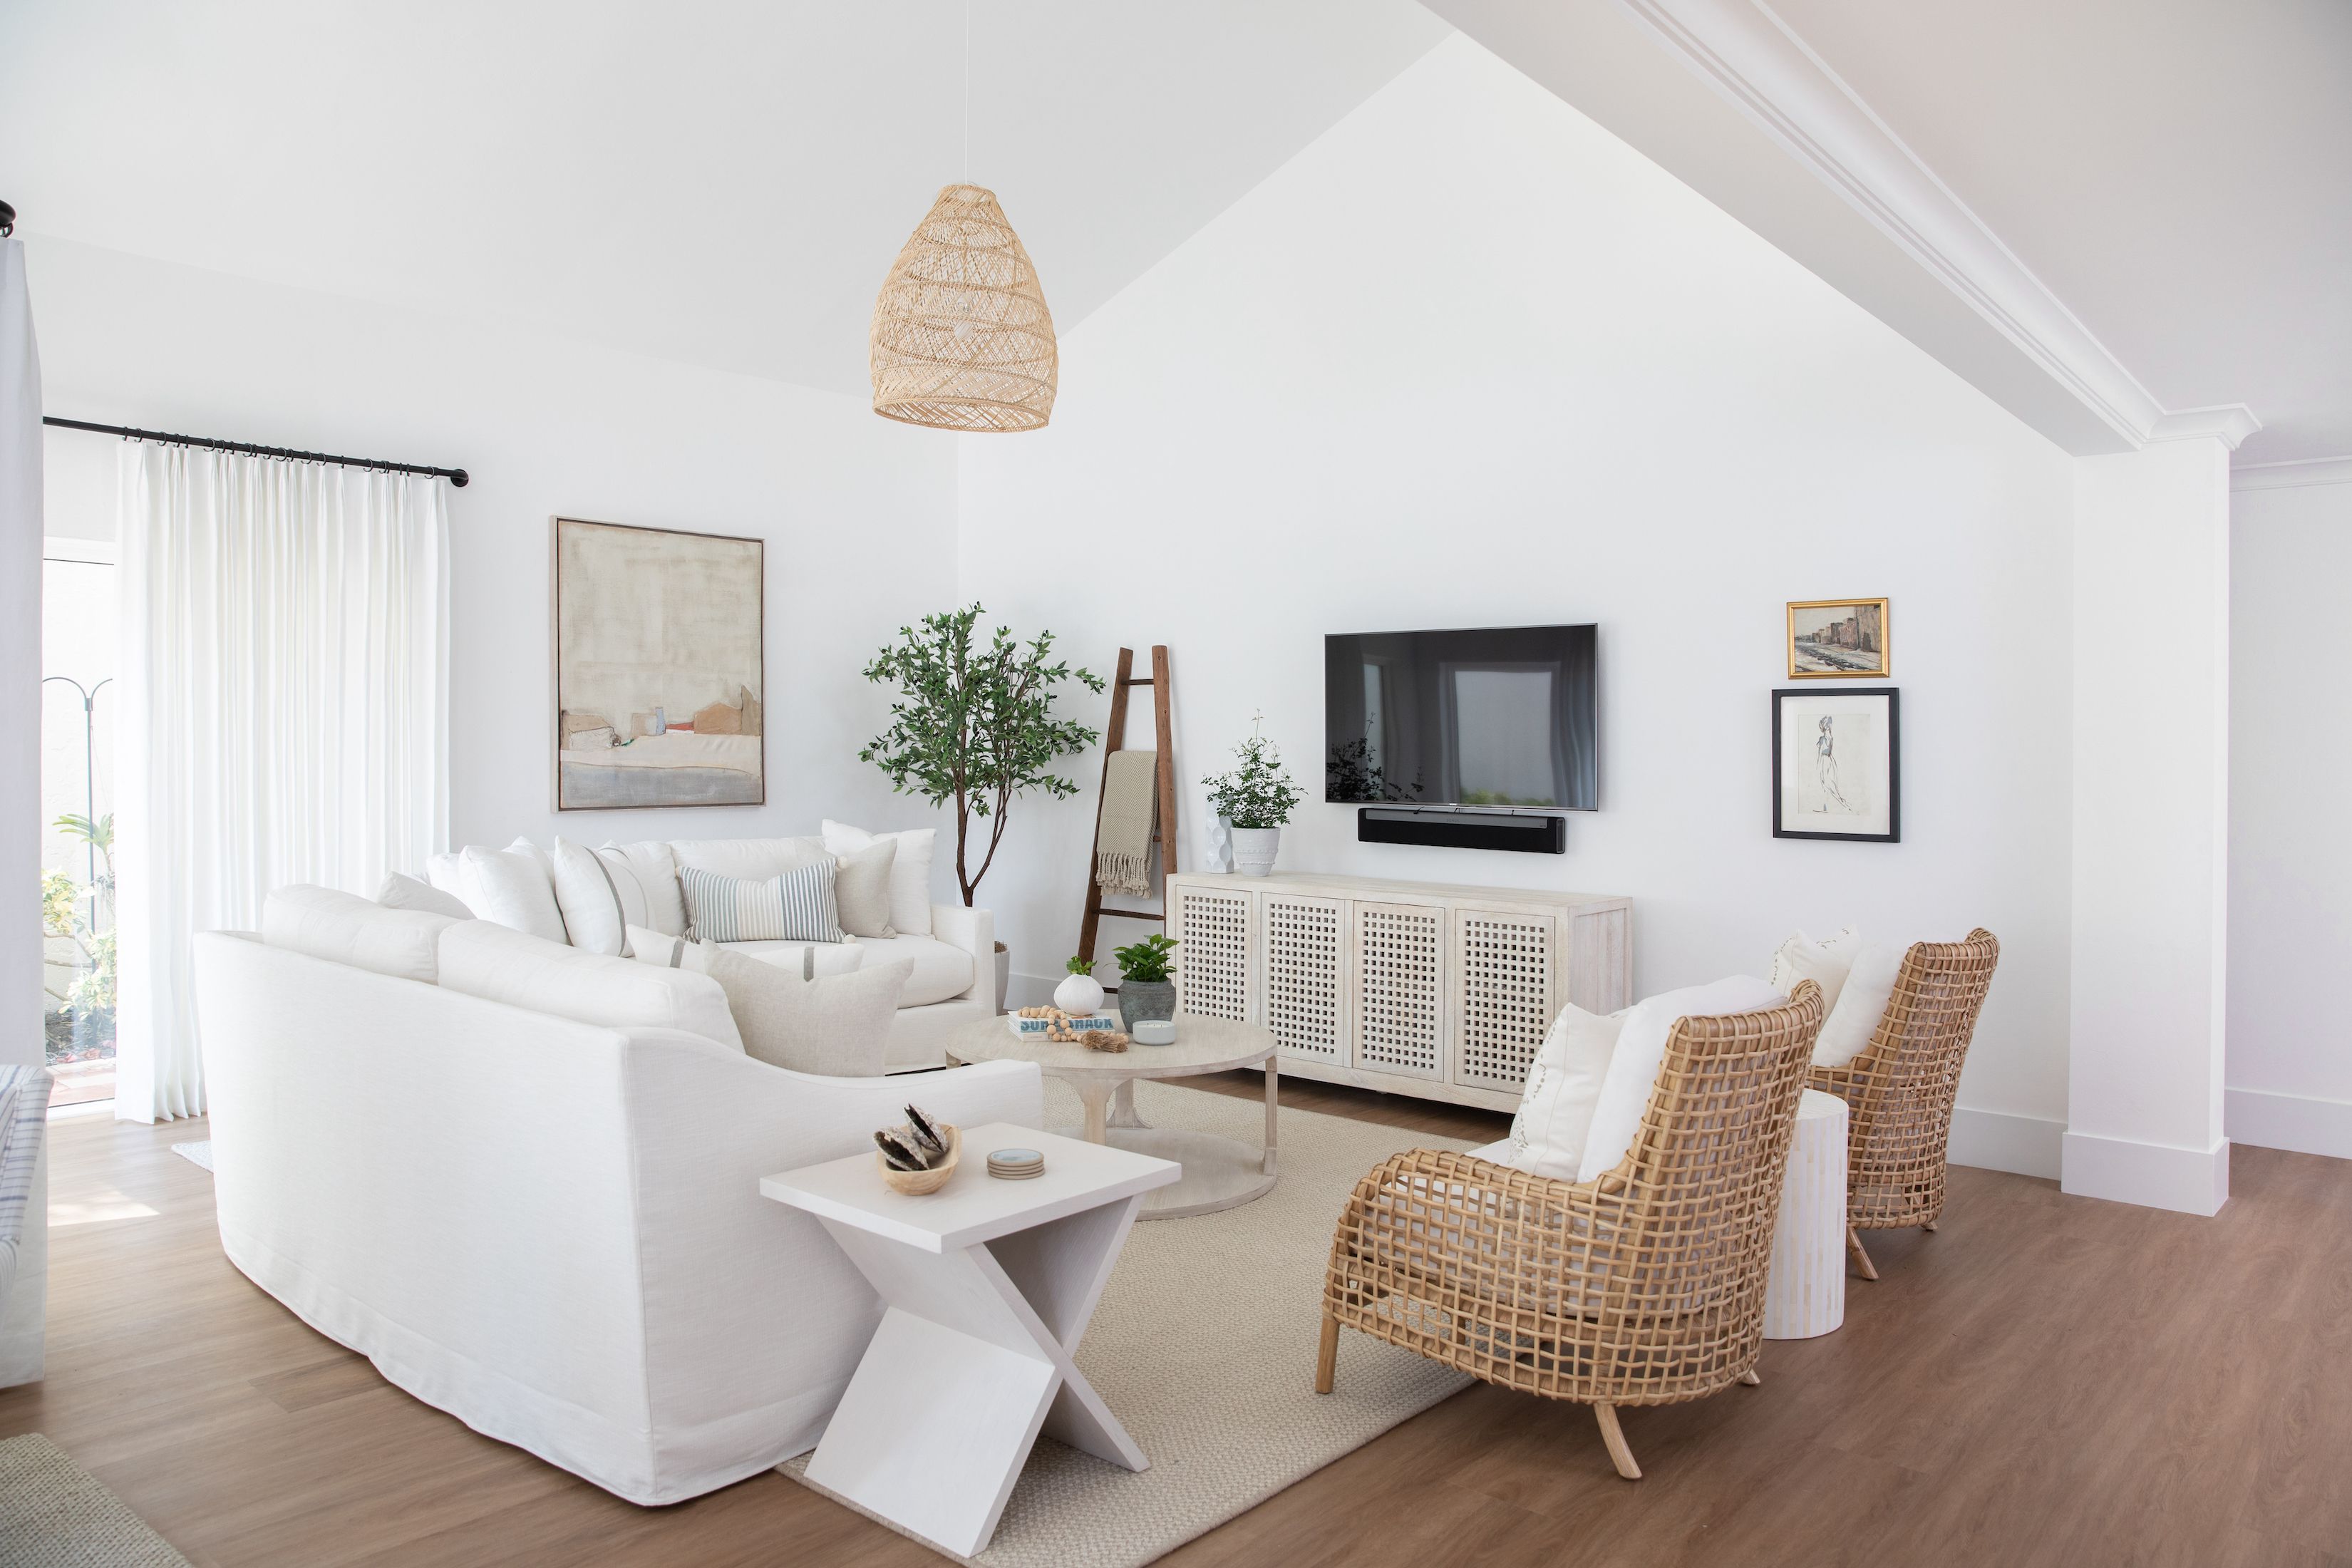 20 Best Coastal Decor Ideas   Modern Coastal Furniture and More